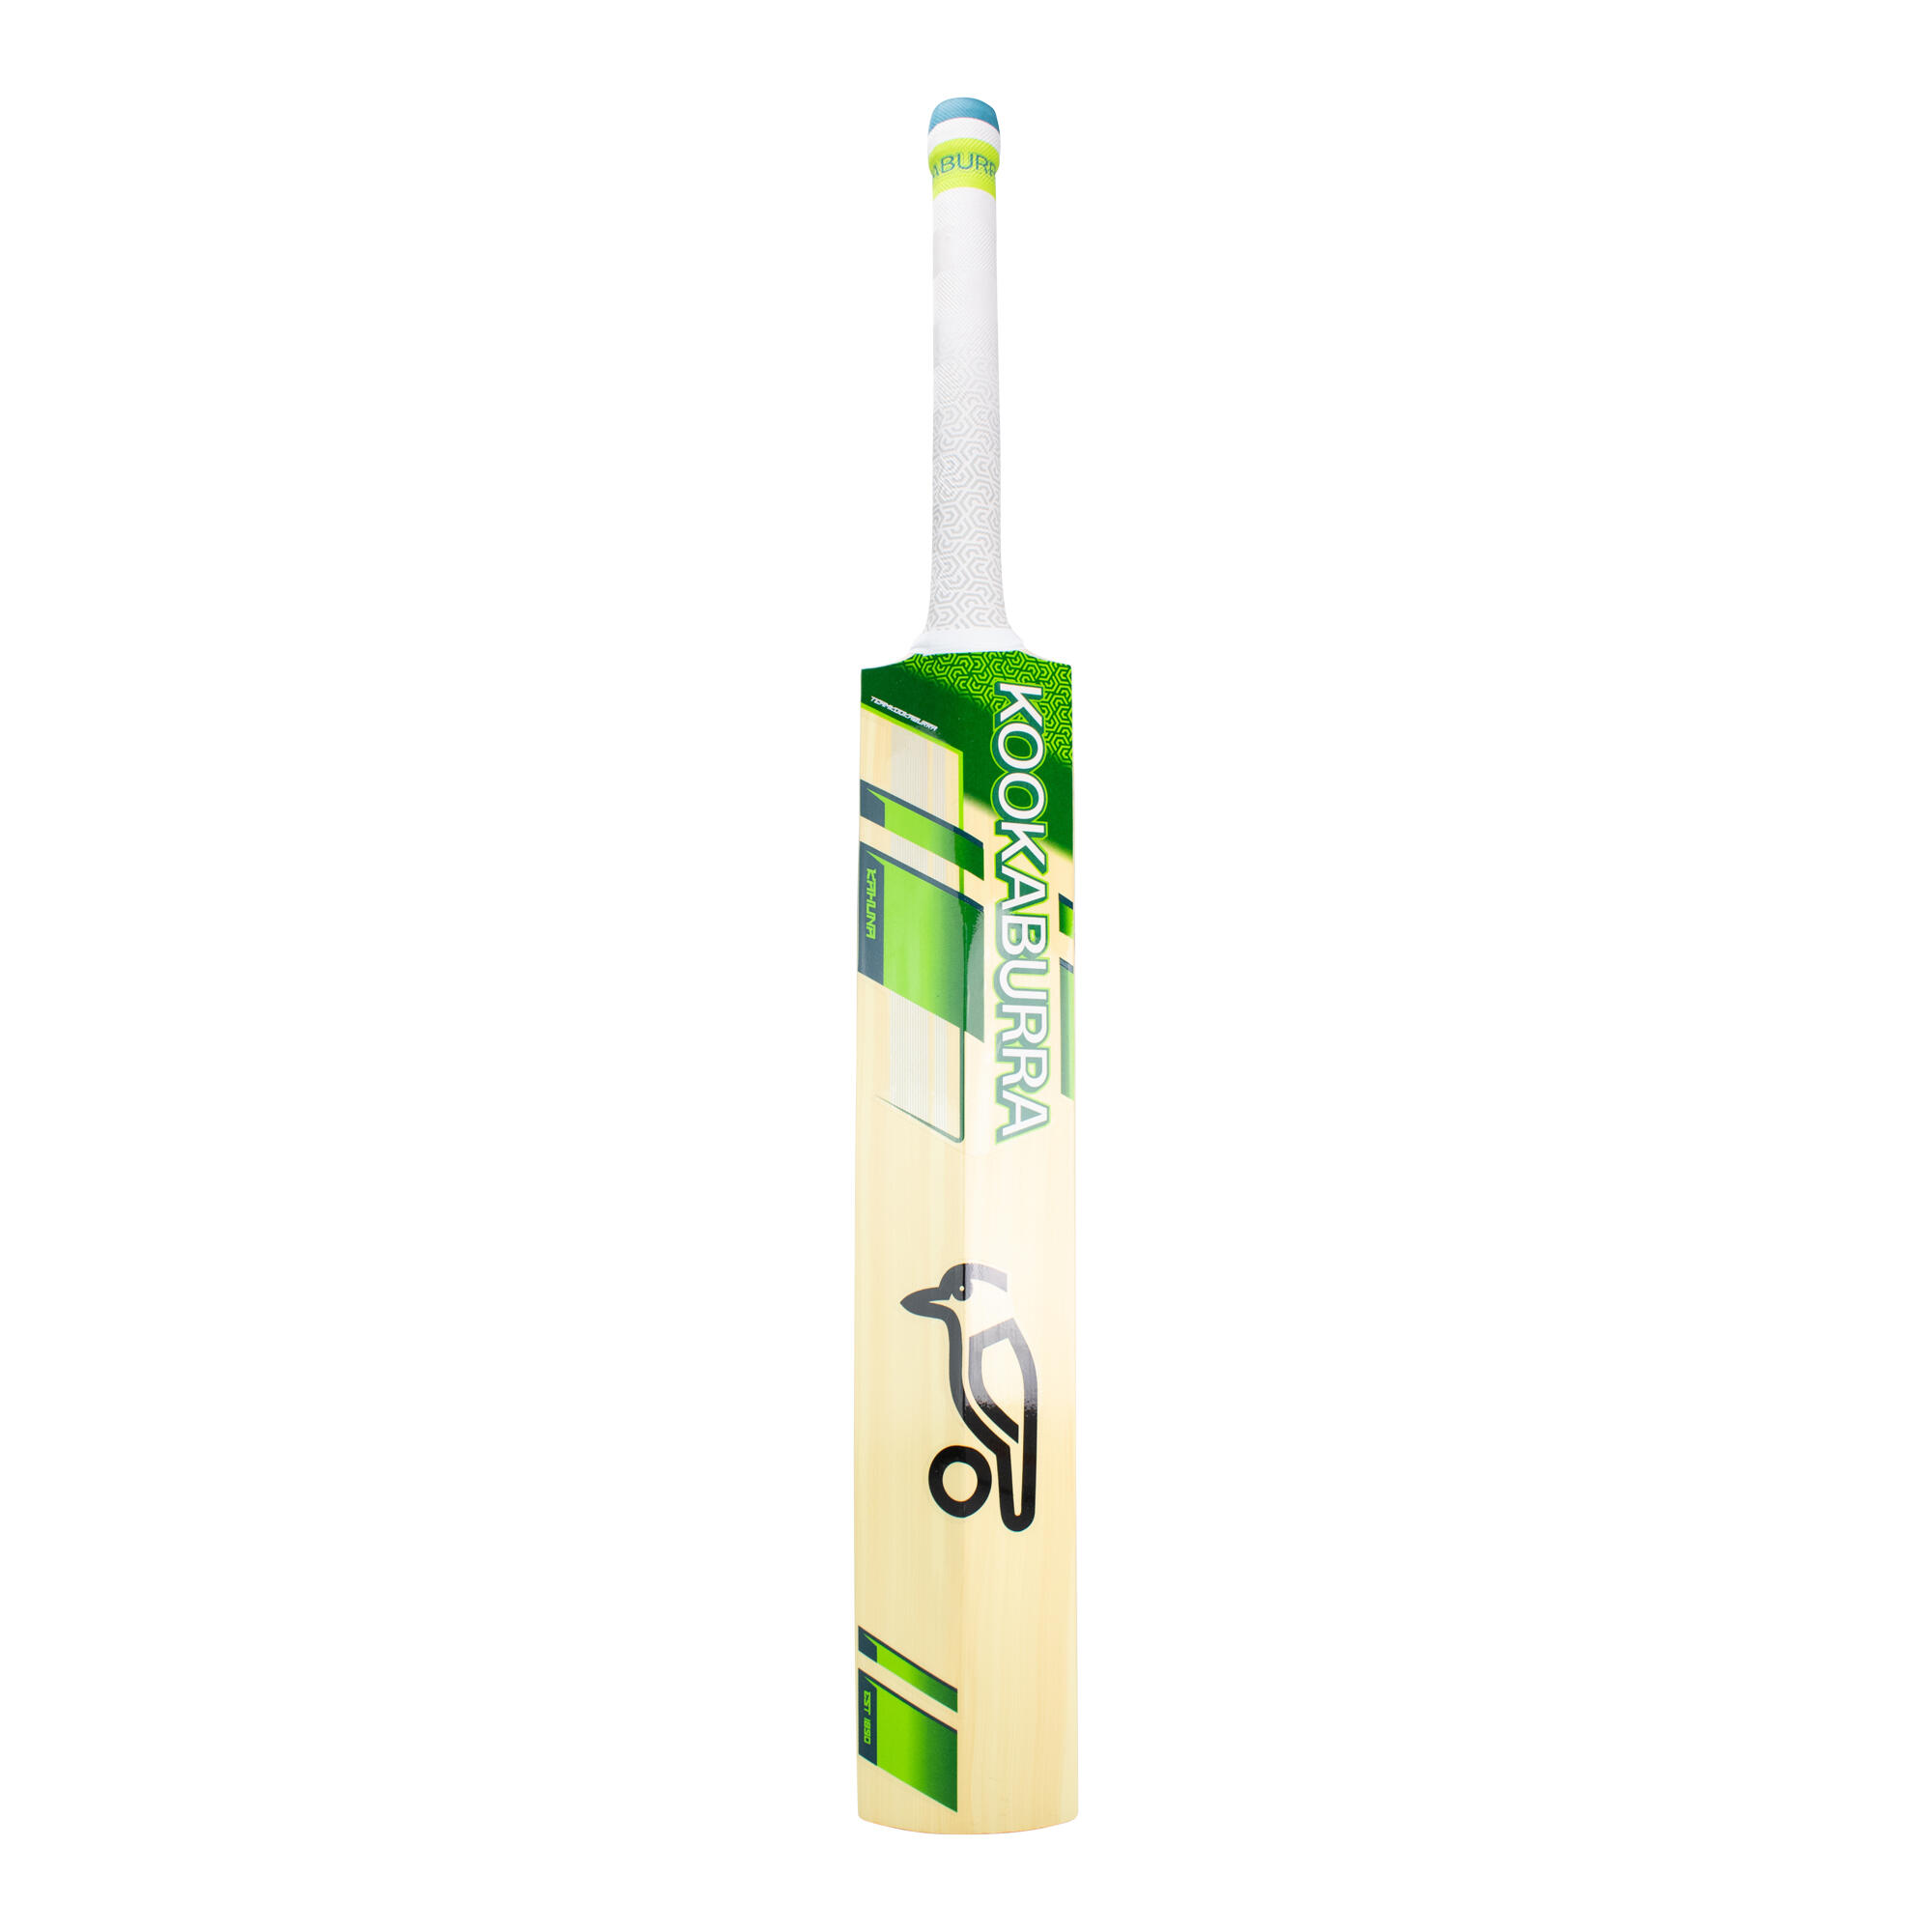 Kookaburra Kahuna 9.1 Kashmir Willow Cricket Bat sizes Harrow and Short Handle 3/6